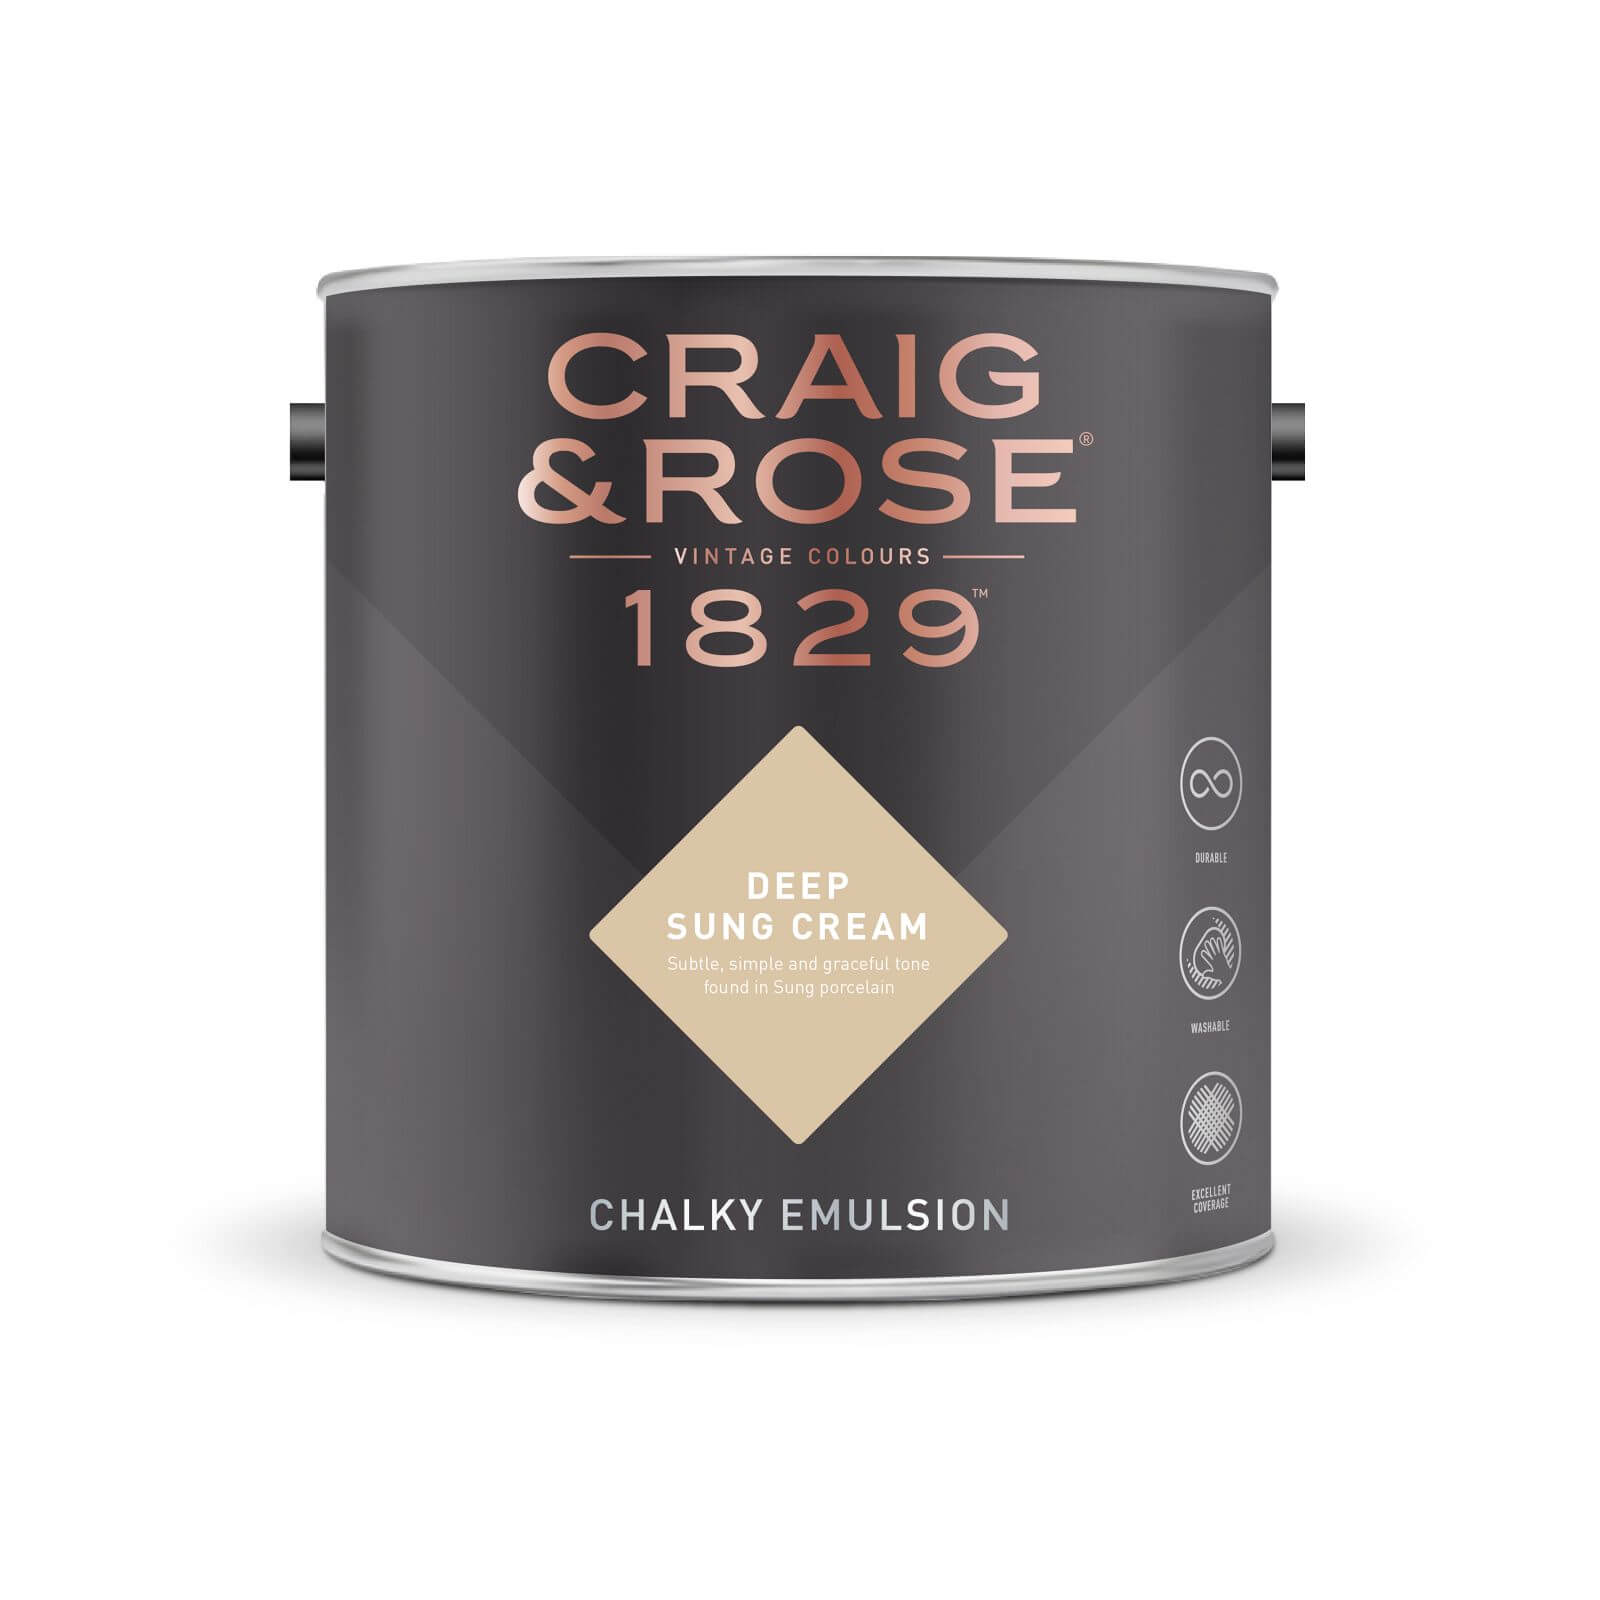 Craig & Rose 1829 Chalky Emulsion Paint Deep Sung Cream - 5L